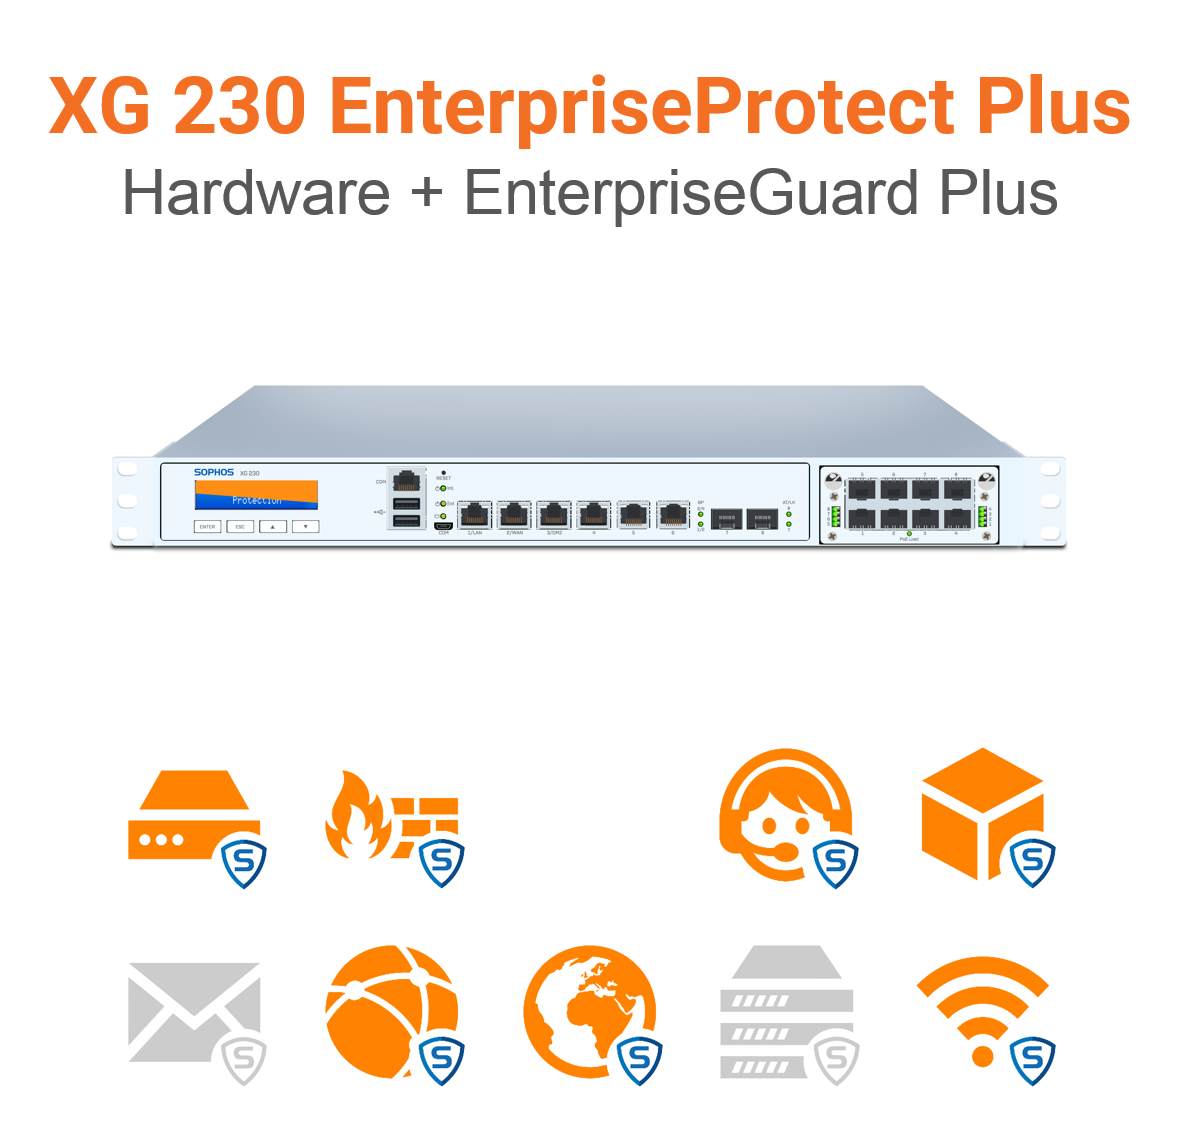 Sophos XG 230 EnterpriseProtect Plus Bundle (Hardware + Lizenz)